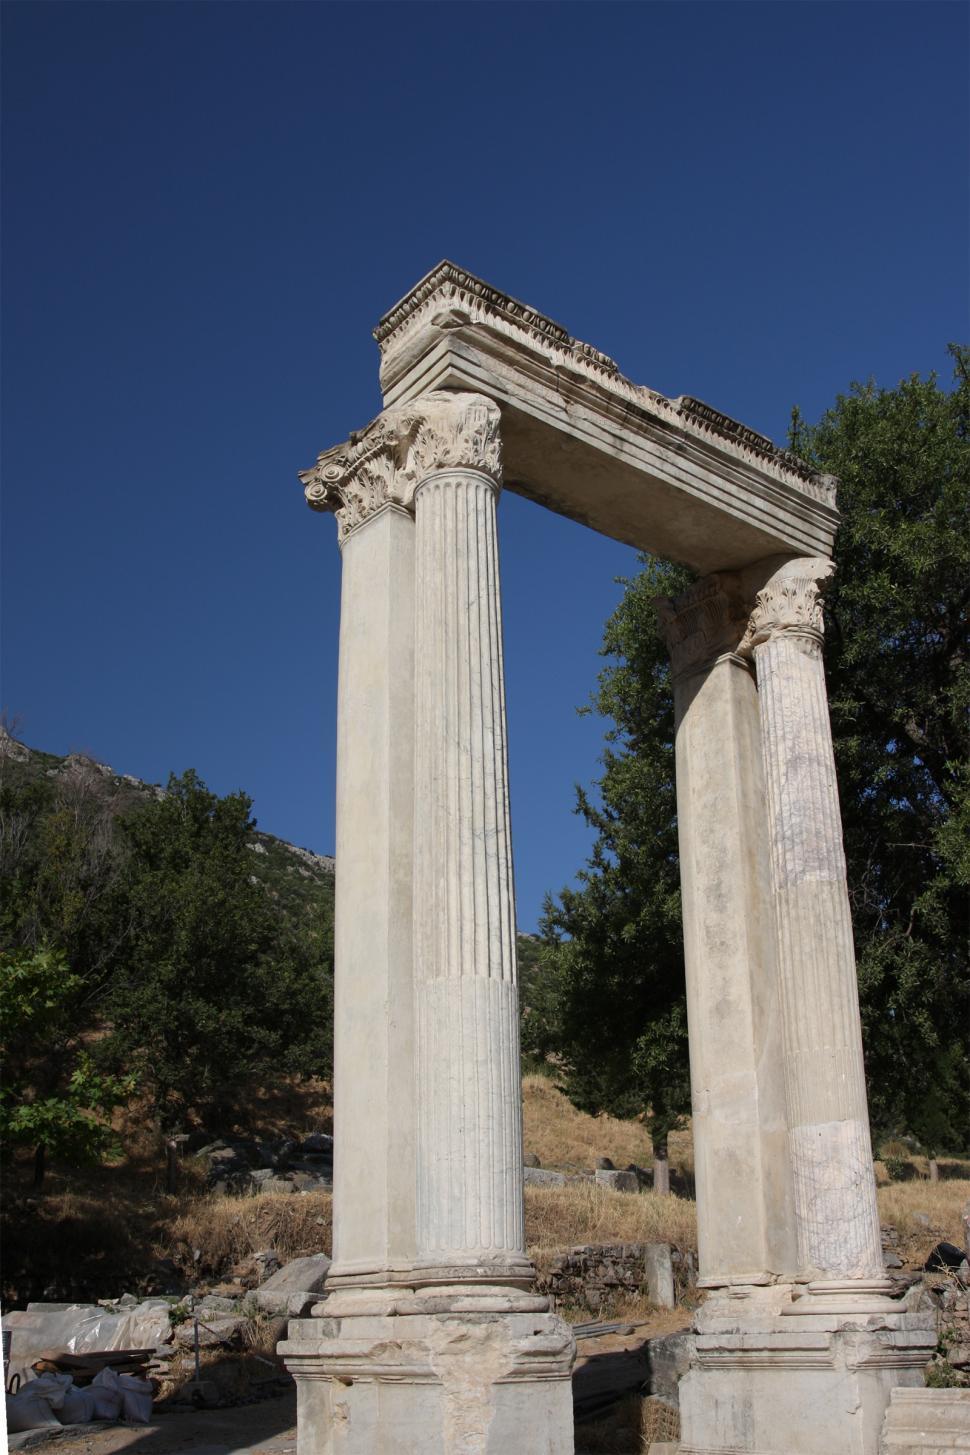 Free Image of Roman Columns 